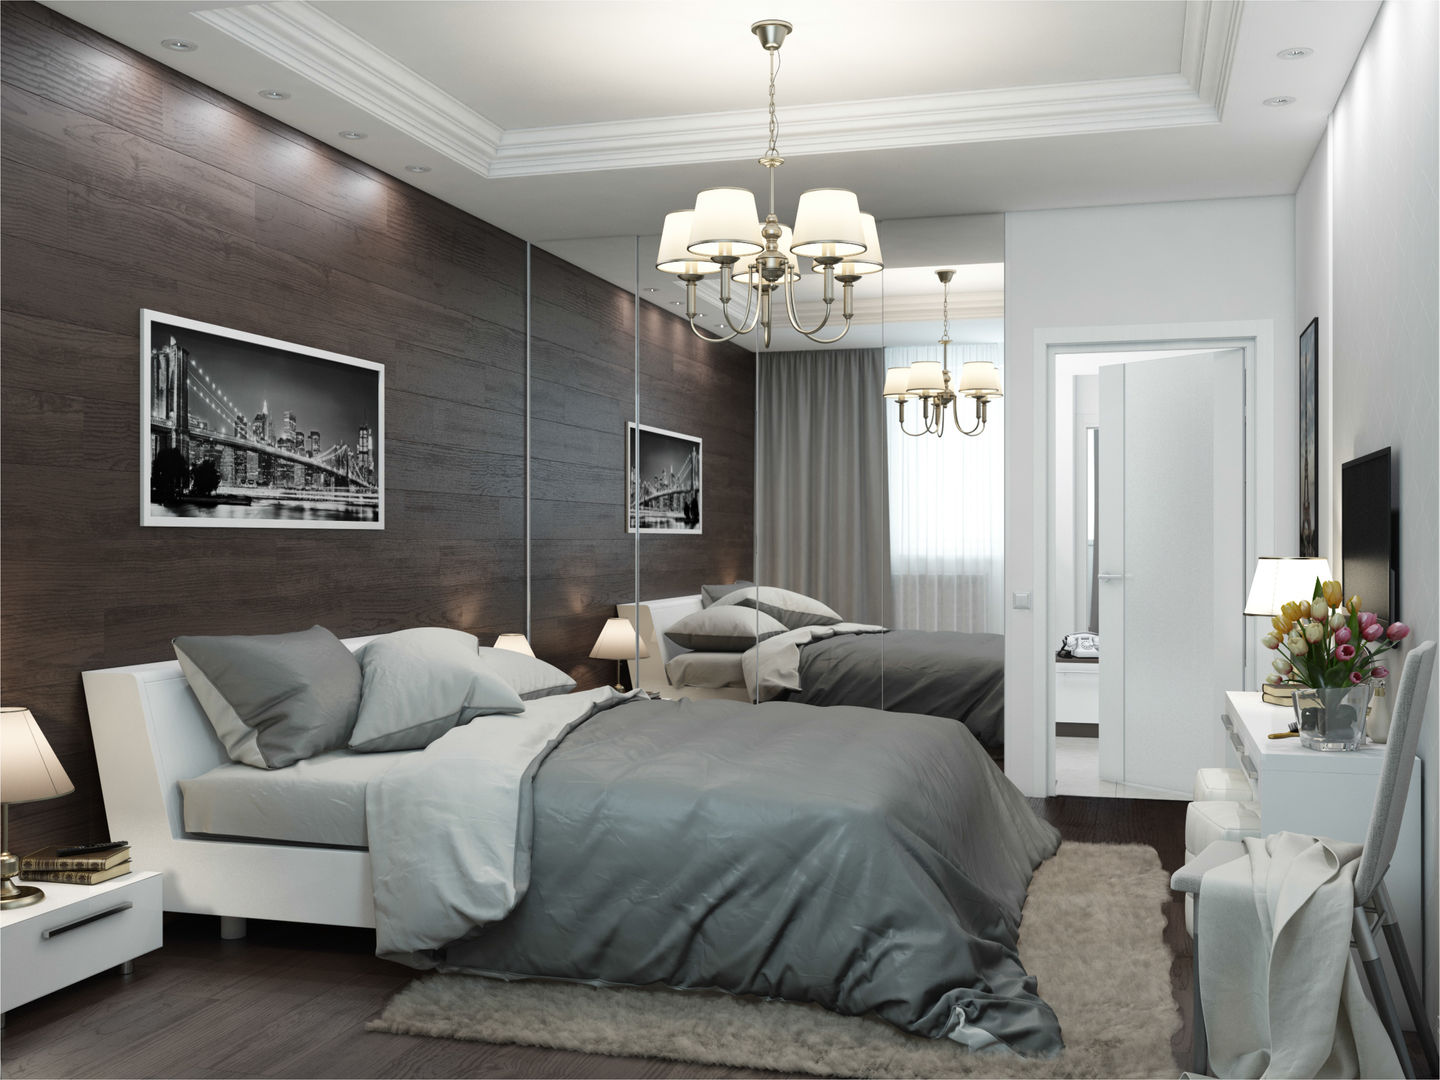 Private apartments|Частная квартира площадью 72 кв.м., Rosso Rosso Спальня в стиле модерн